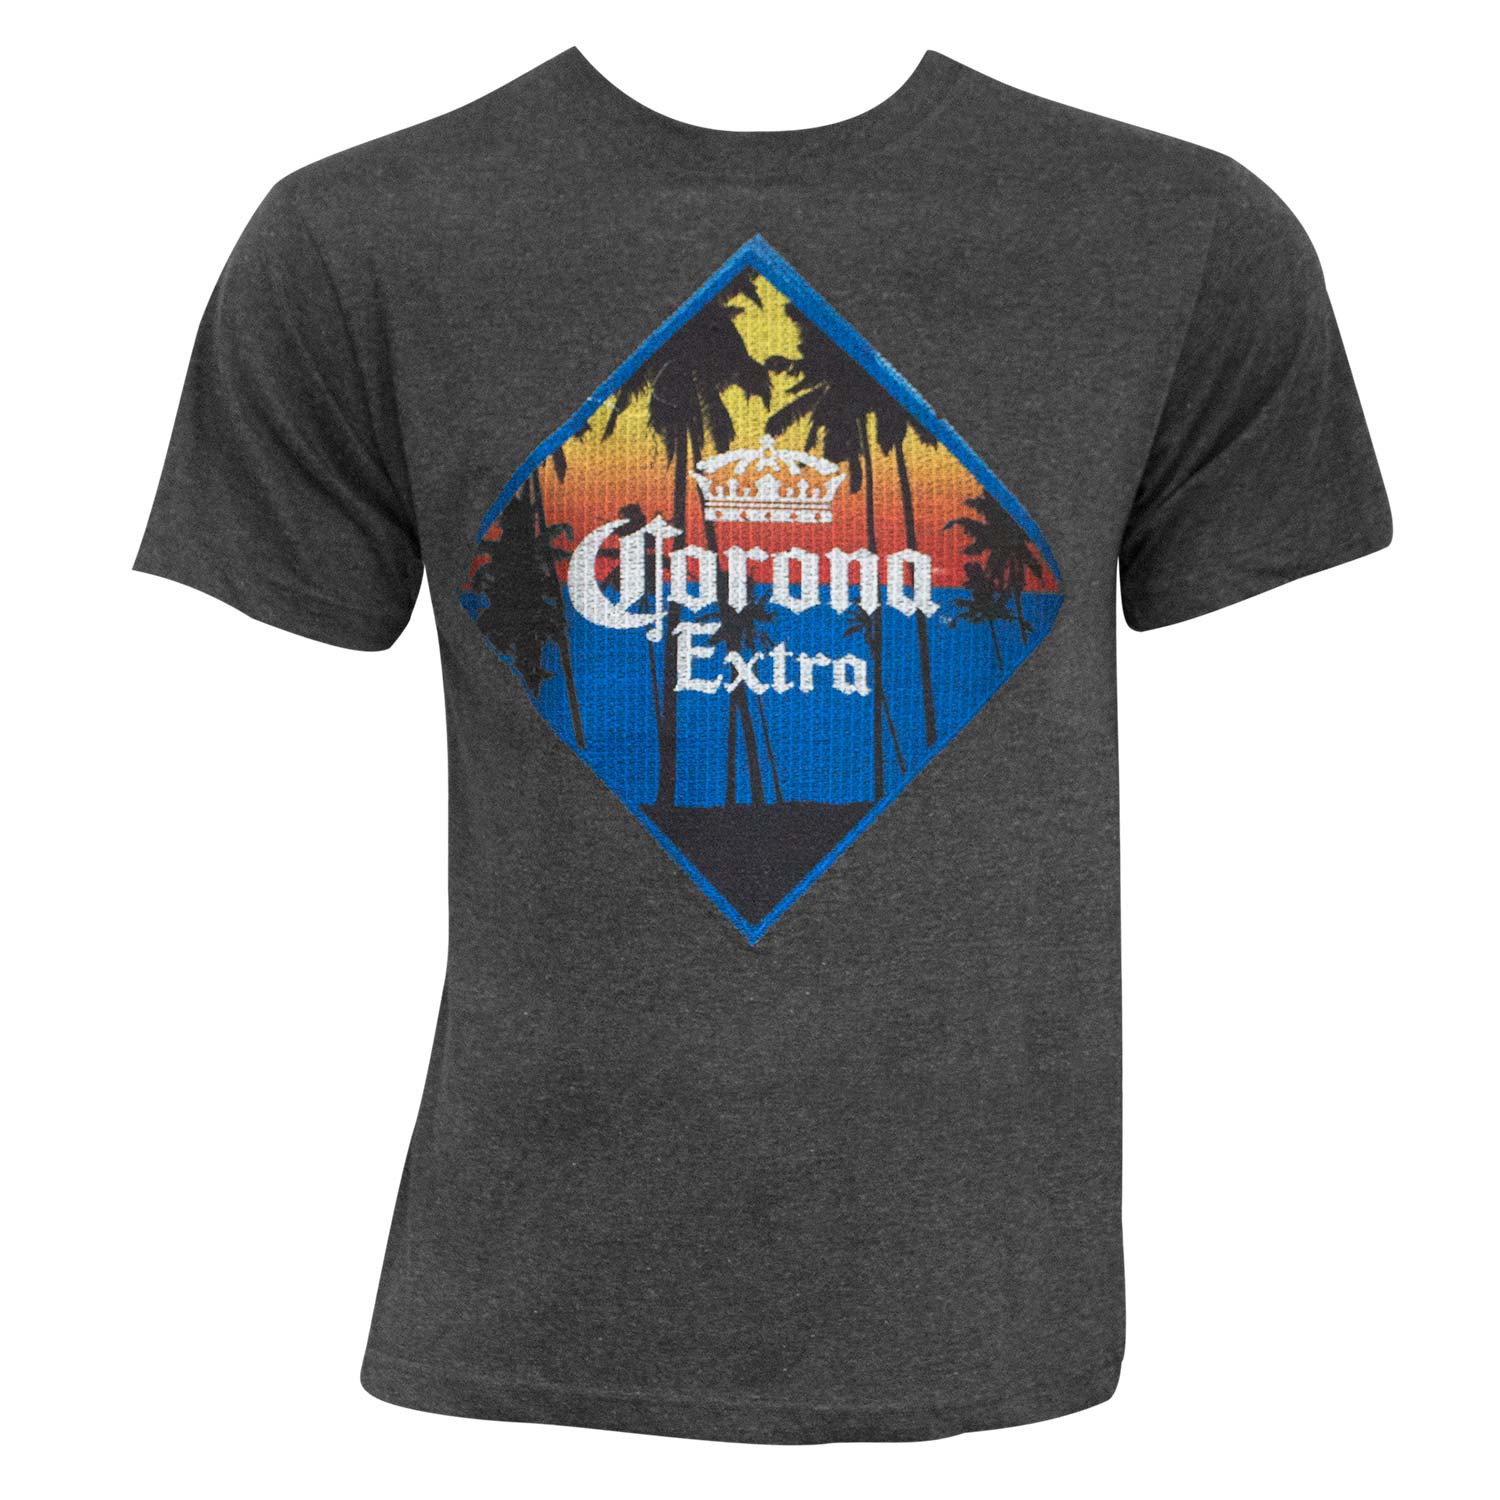 Corona Extra Embroidered Charcoal Tee Shirt